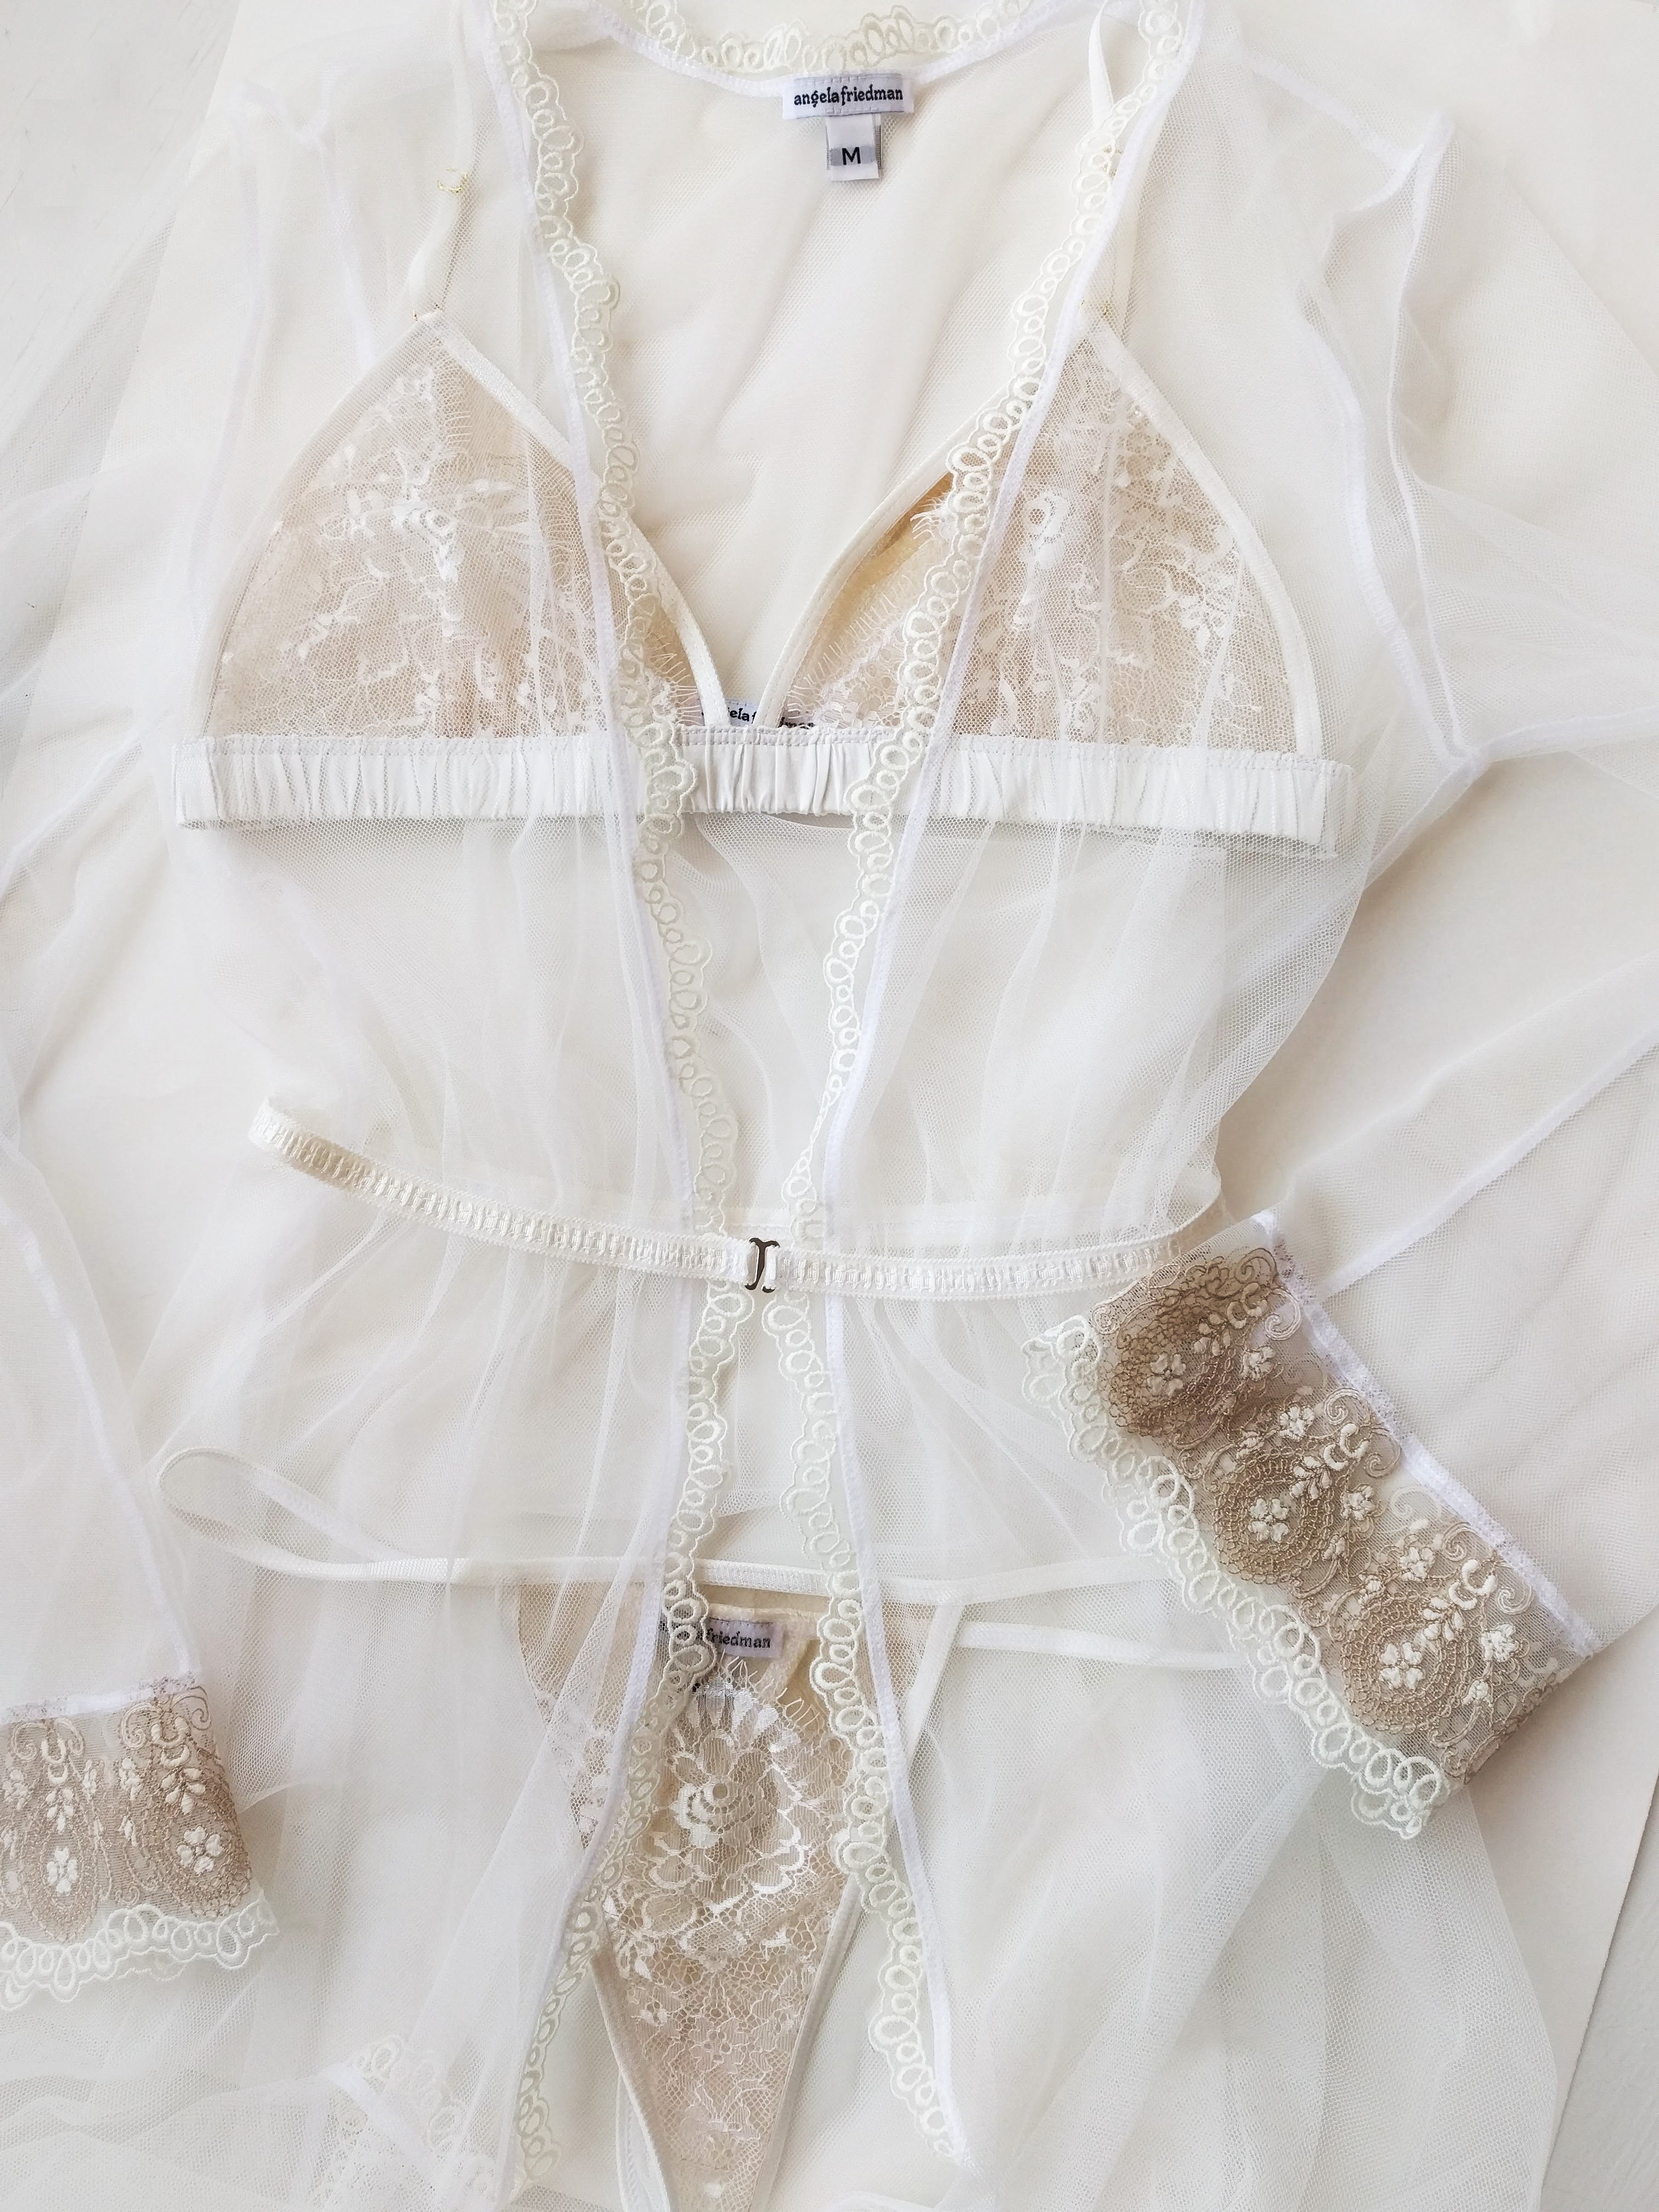 Vintage style bridal lingerie set with white lace underwear